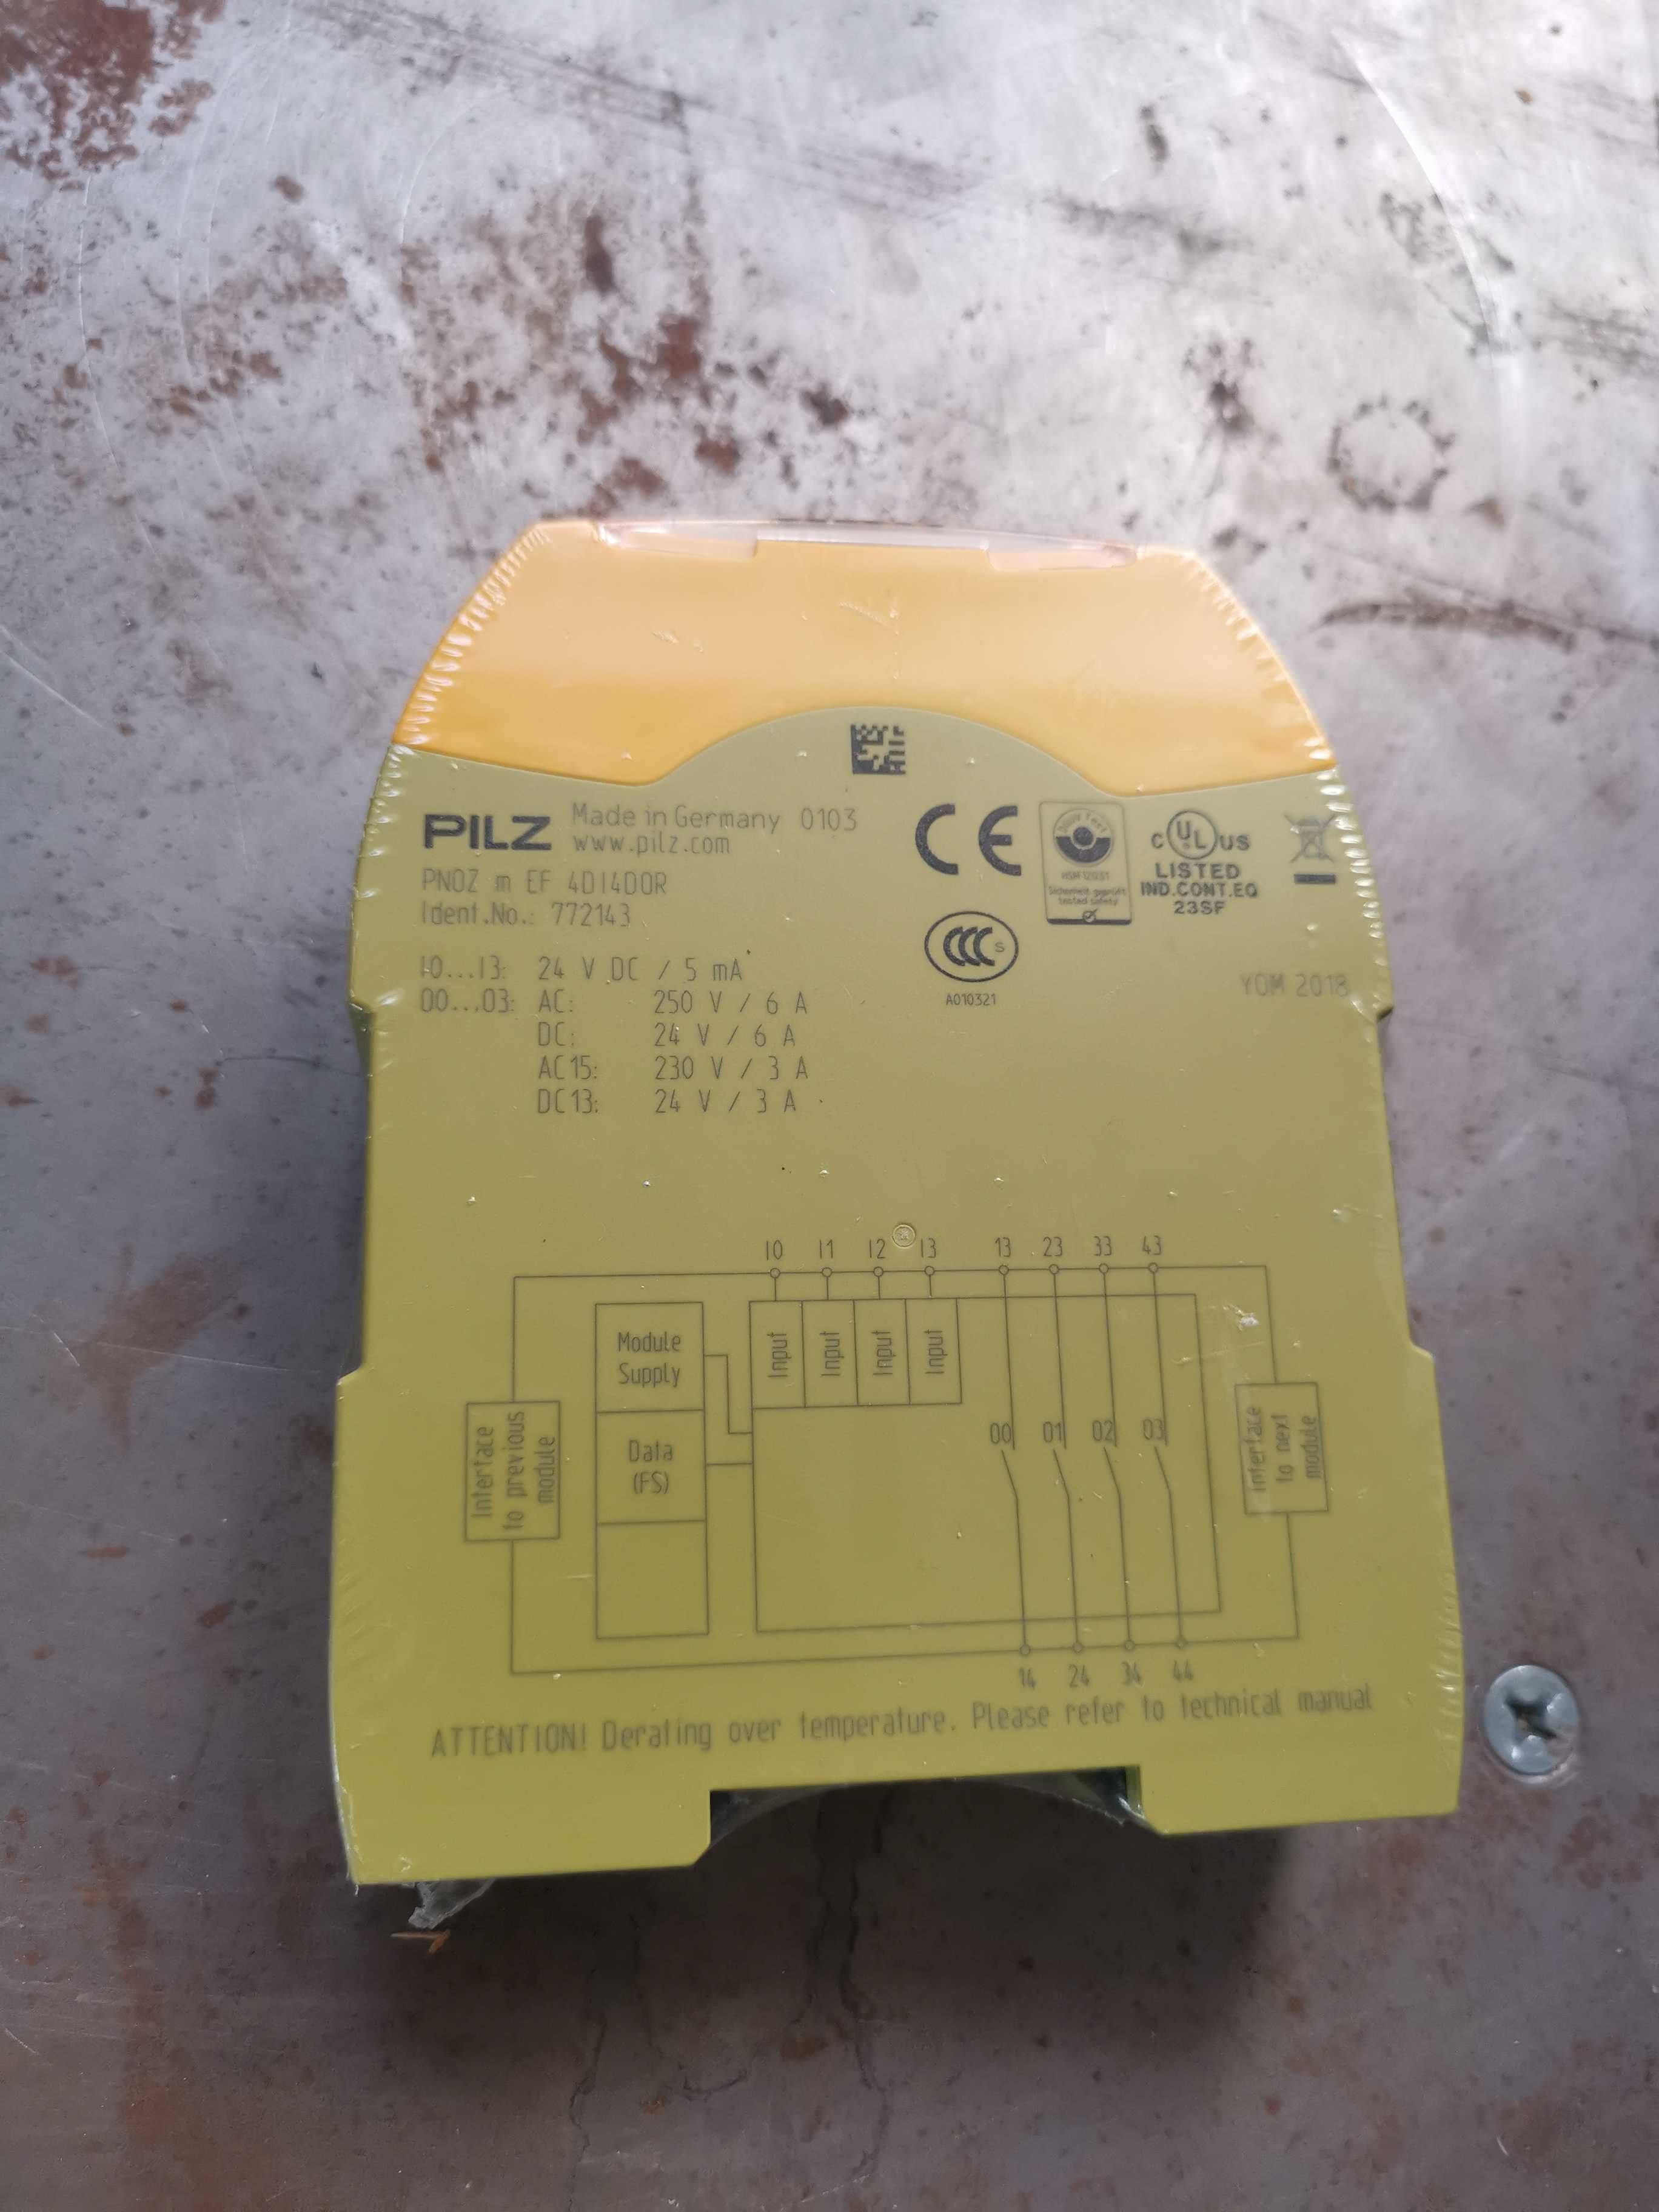 Releu safety modul input/output Pilz 772143 - PNOZ m EF 4DI4DOR